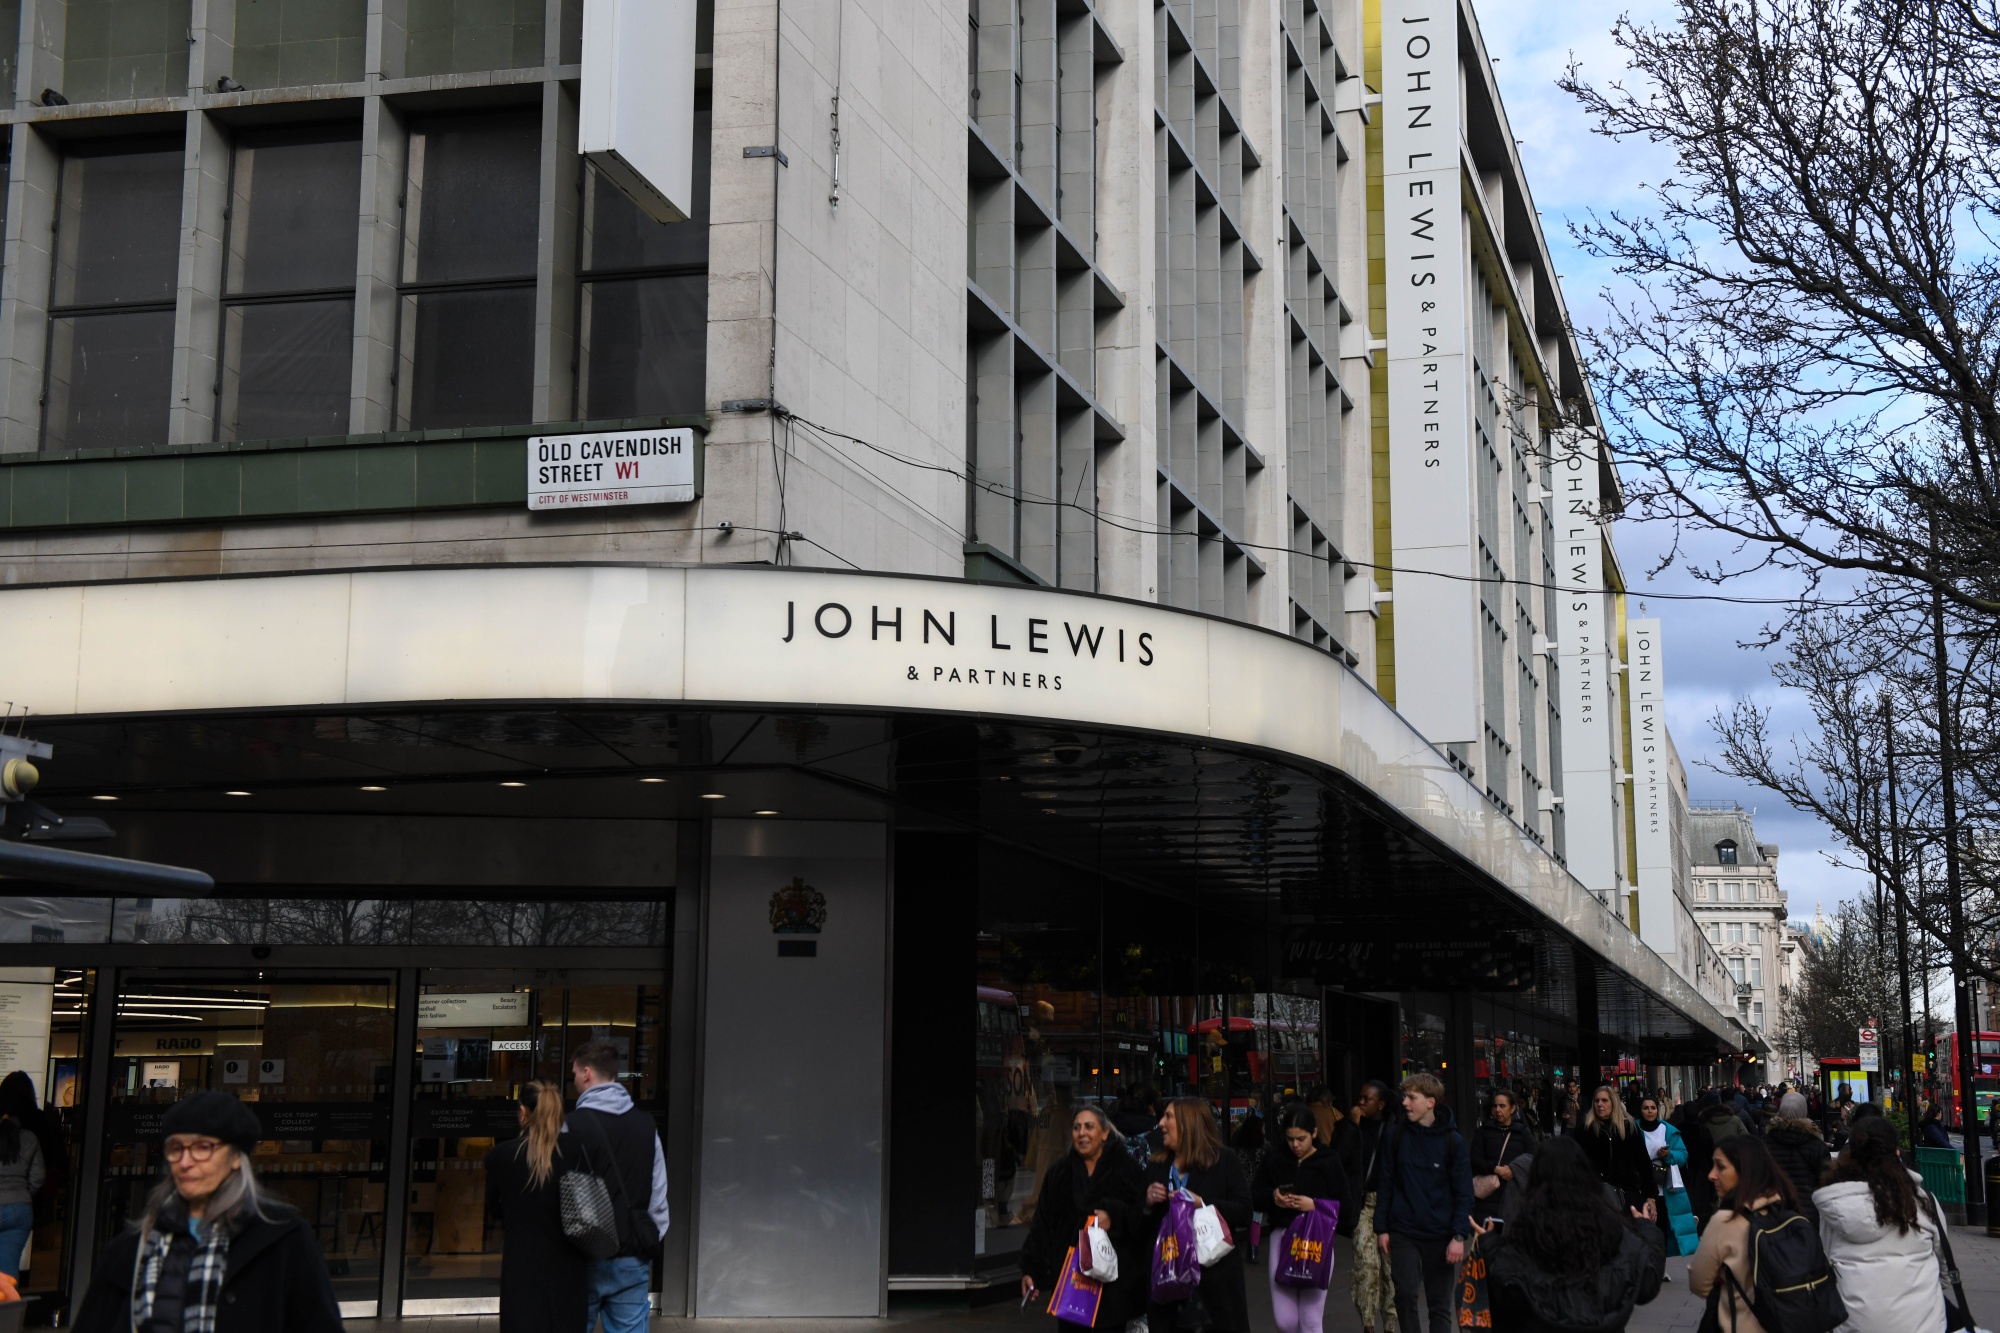 John Lewis & Partners, Department Store